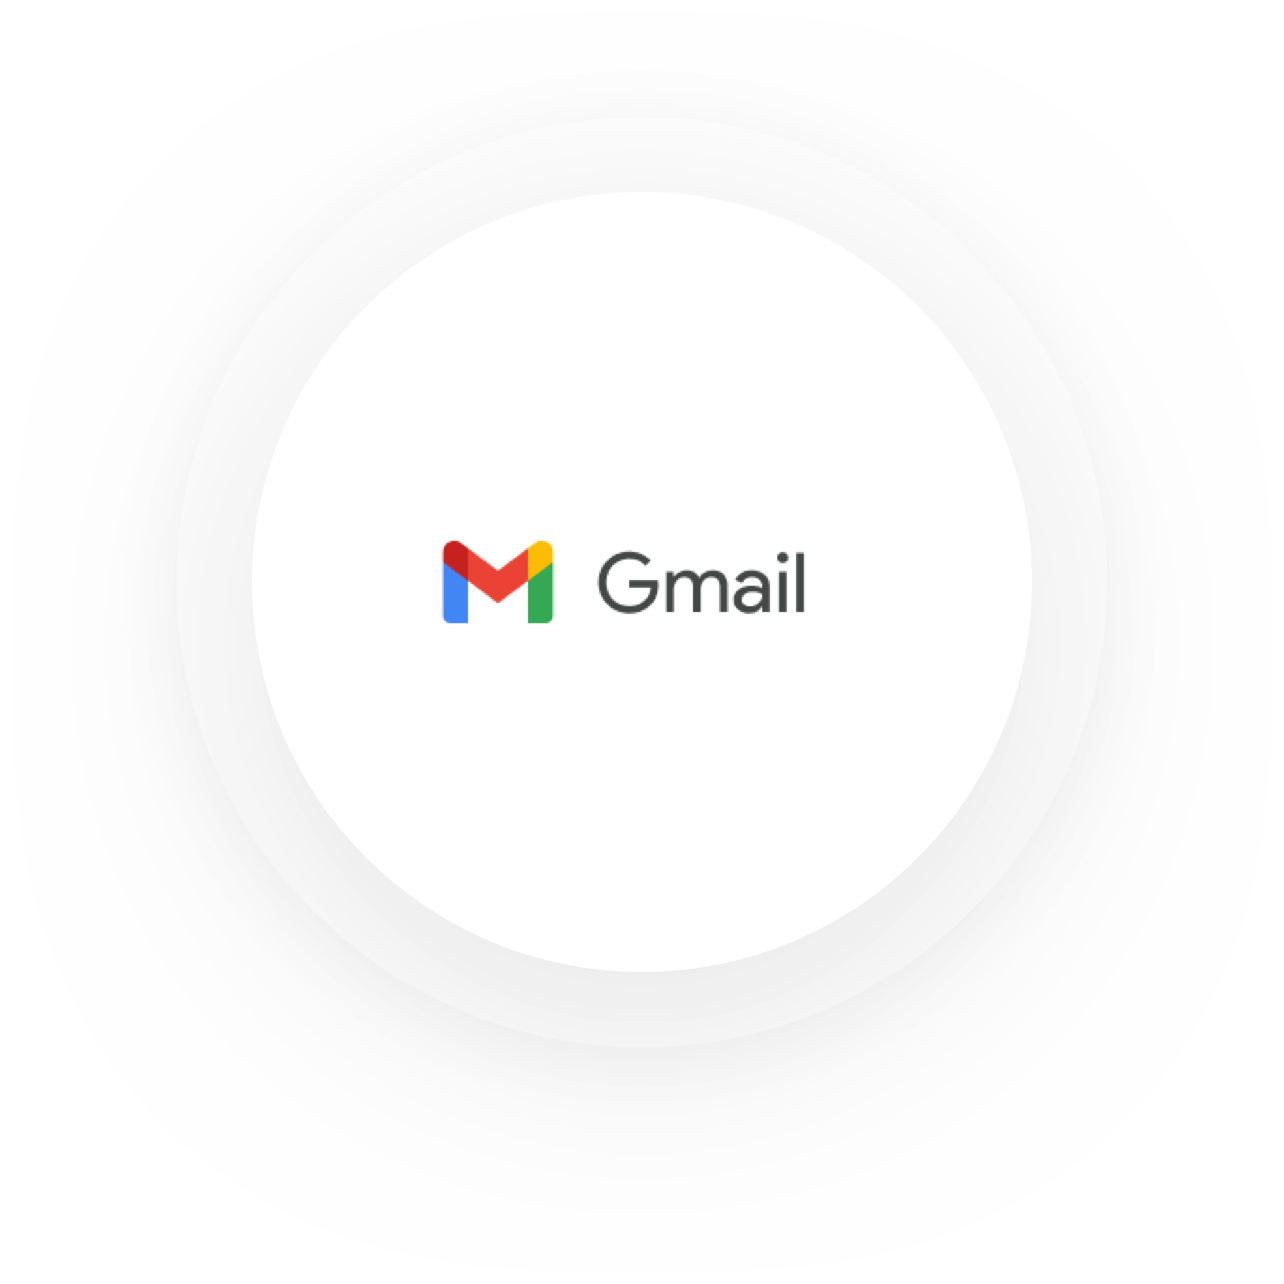 Gmail logo image